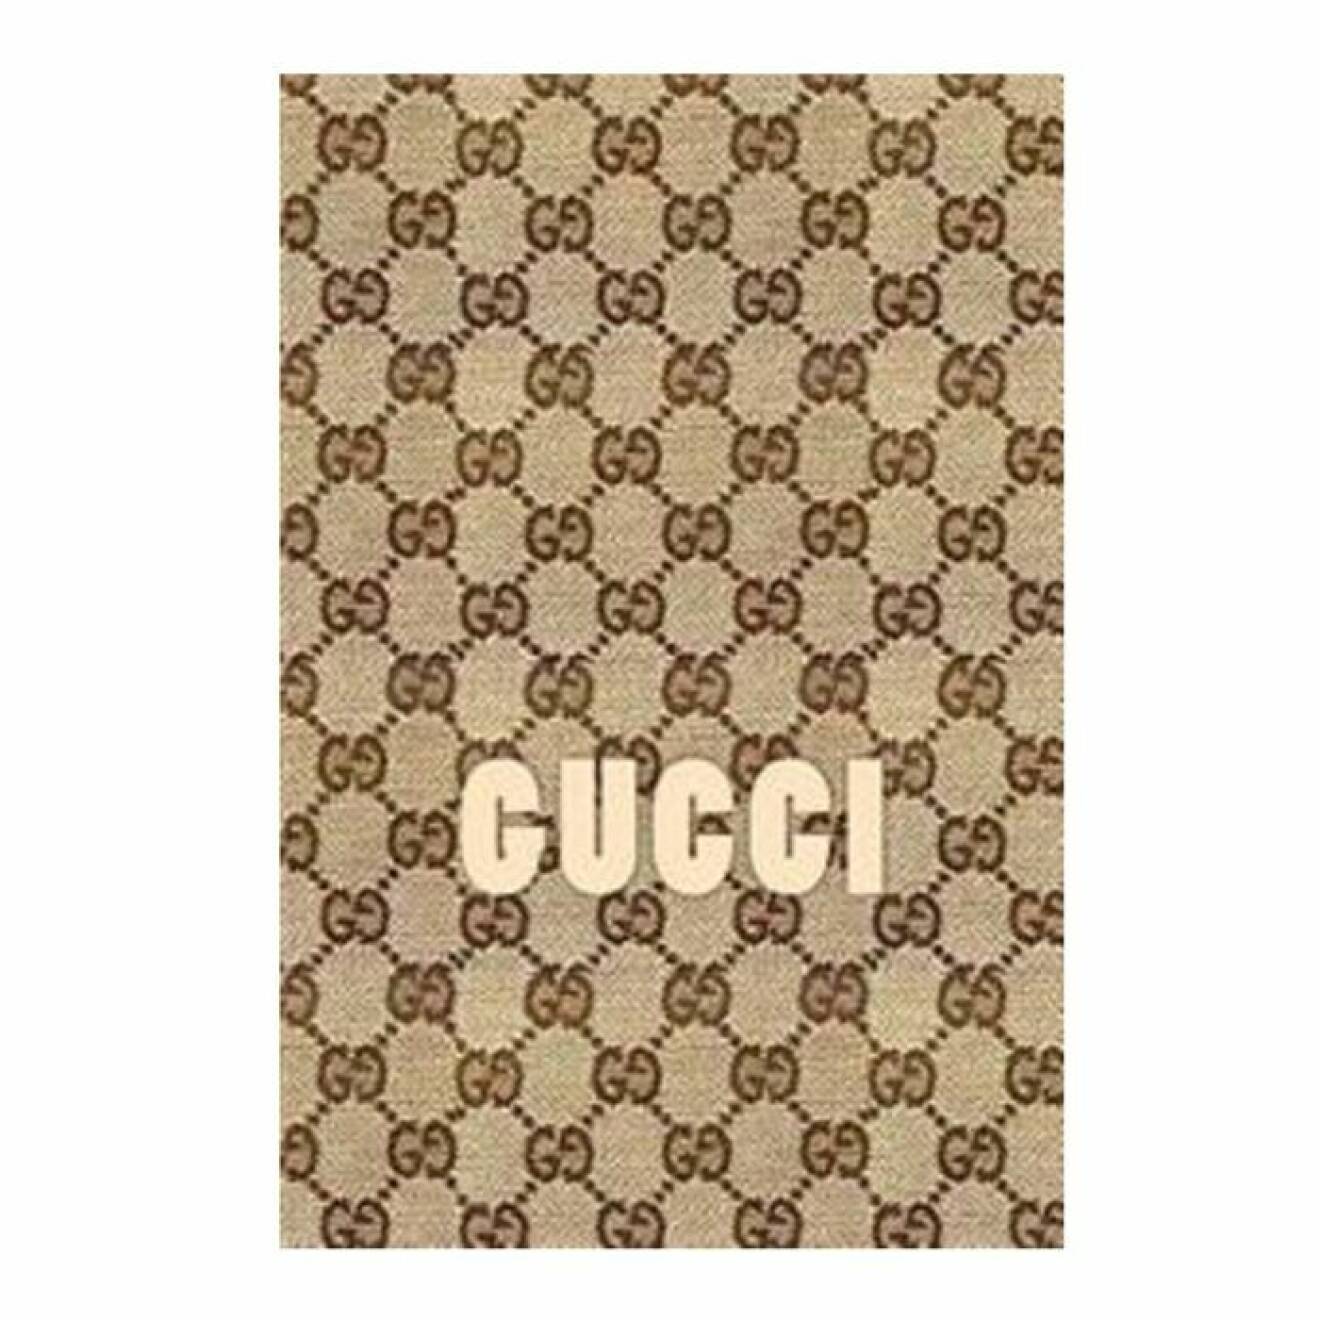 Gucci coffee table